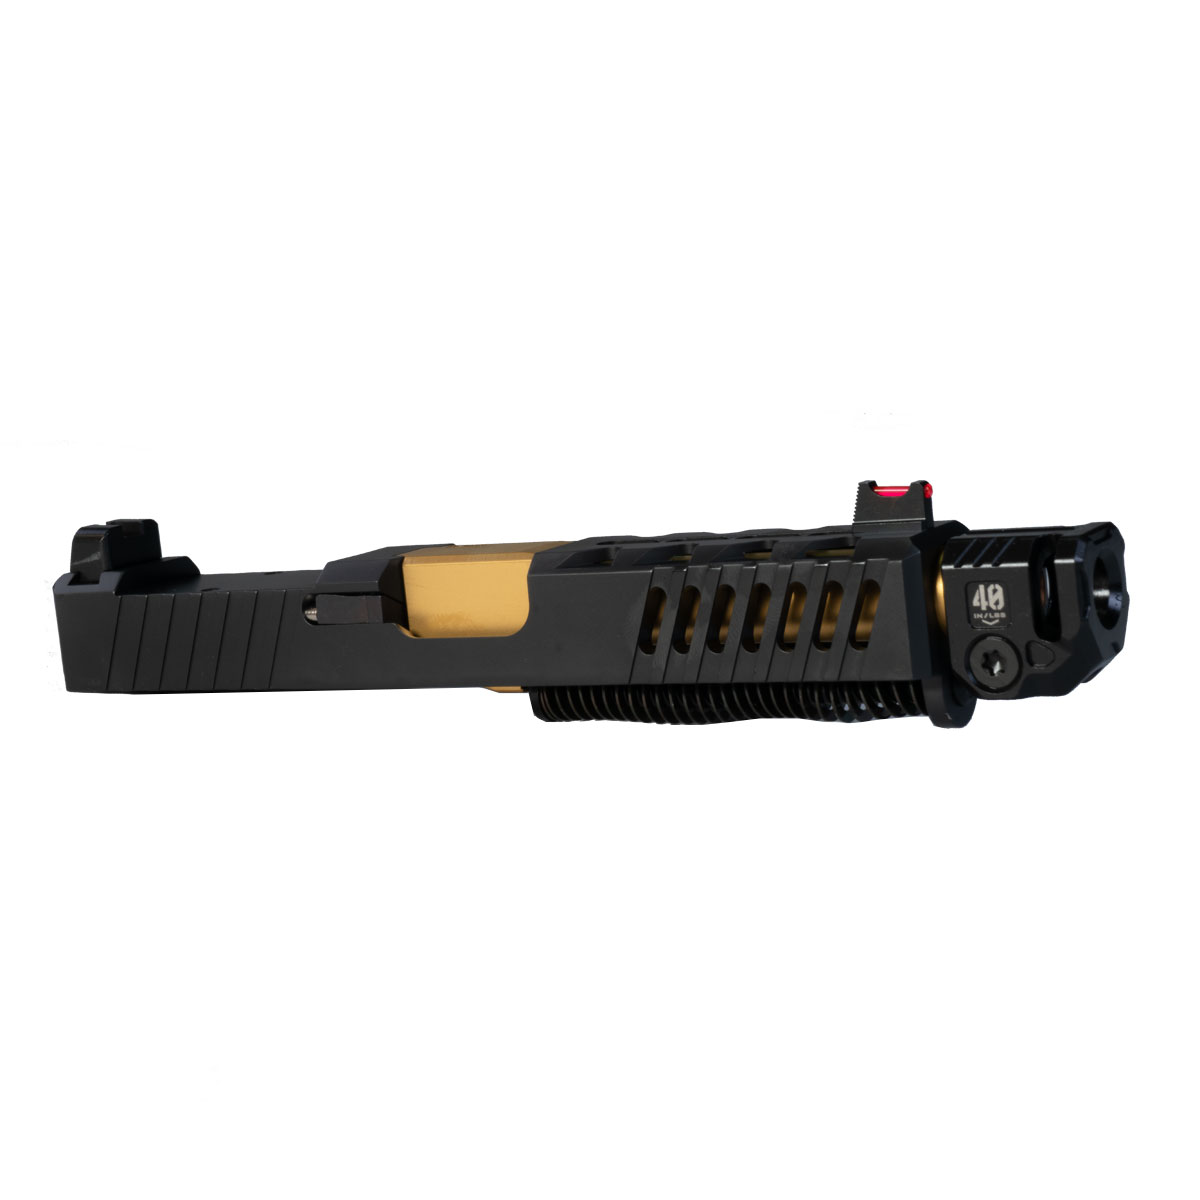 MMC 'Obsidio w/ Strike Industries Compensator' 9mm Complete Slide Kit - Glock 19 Gen 1-3 Compatible